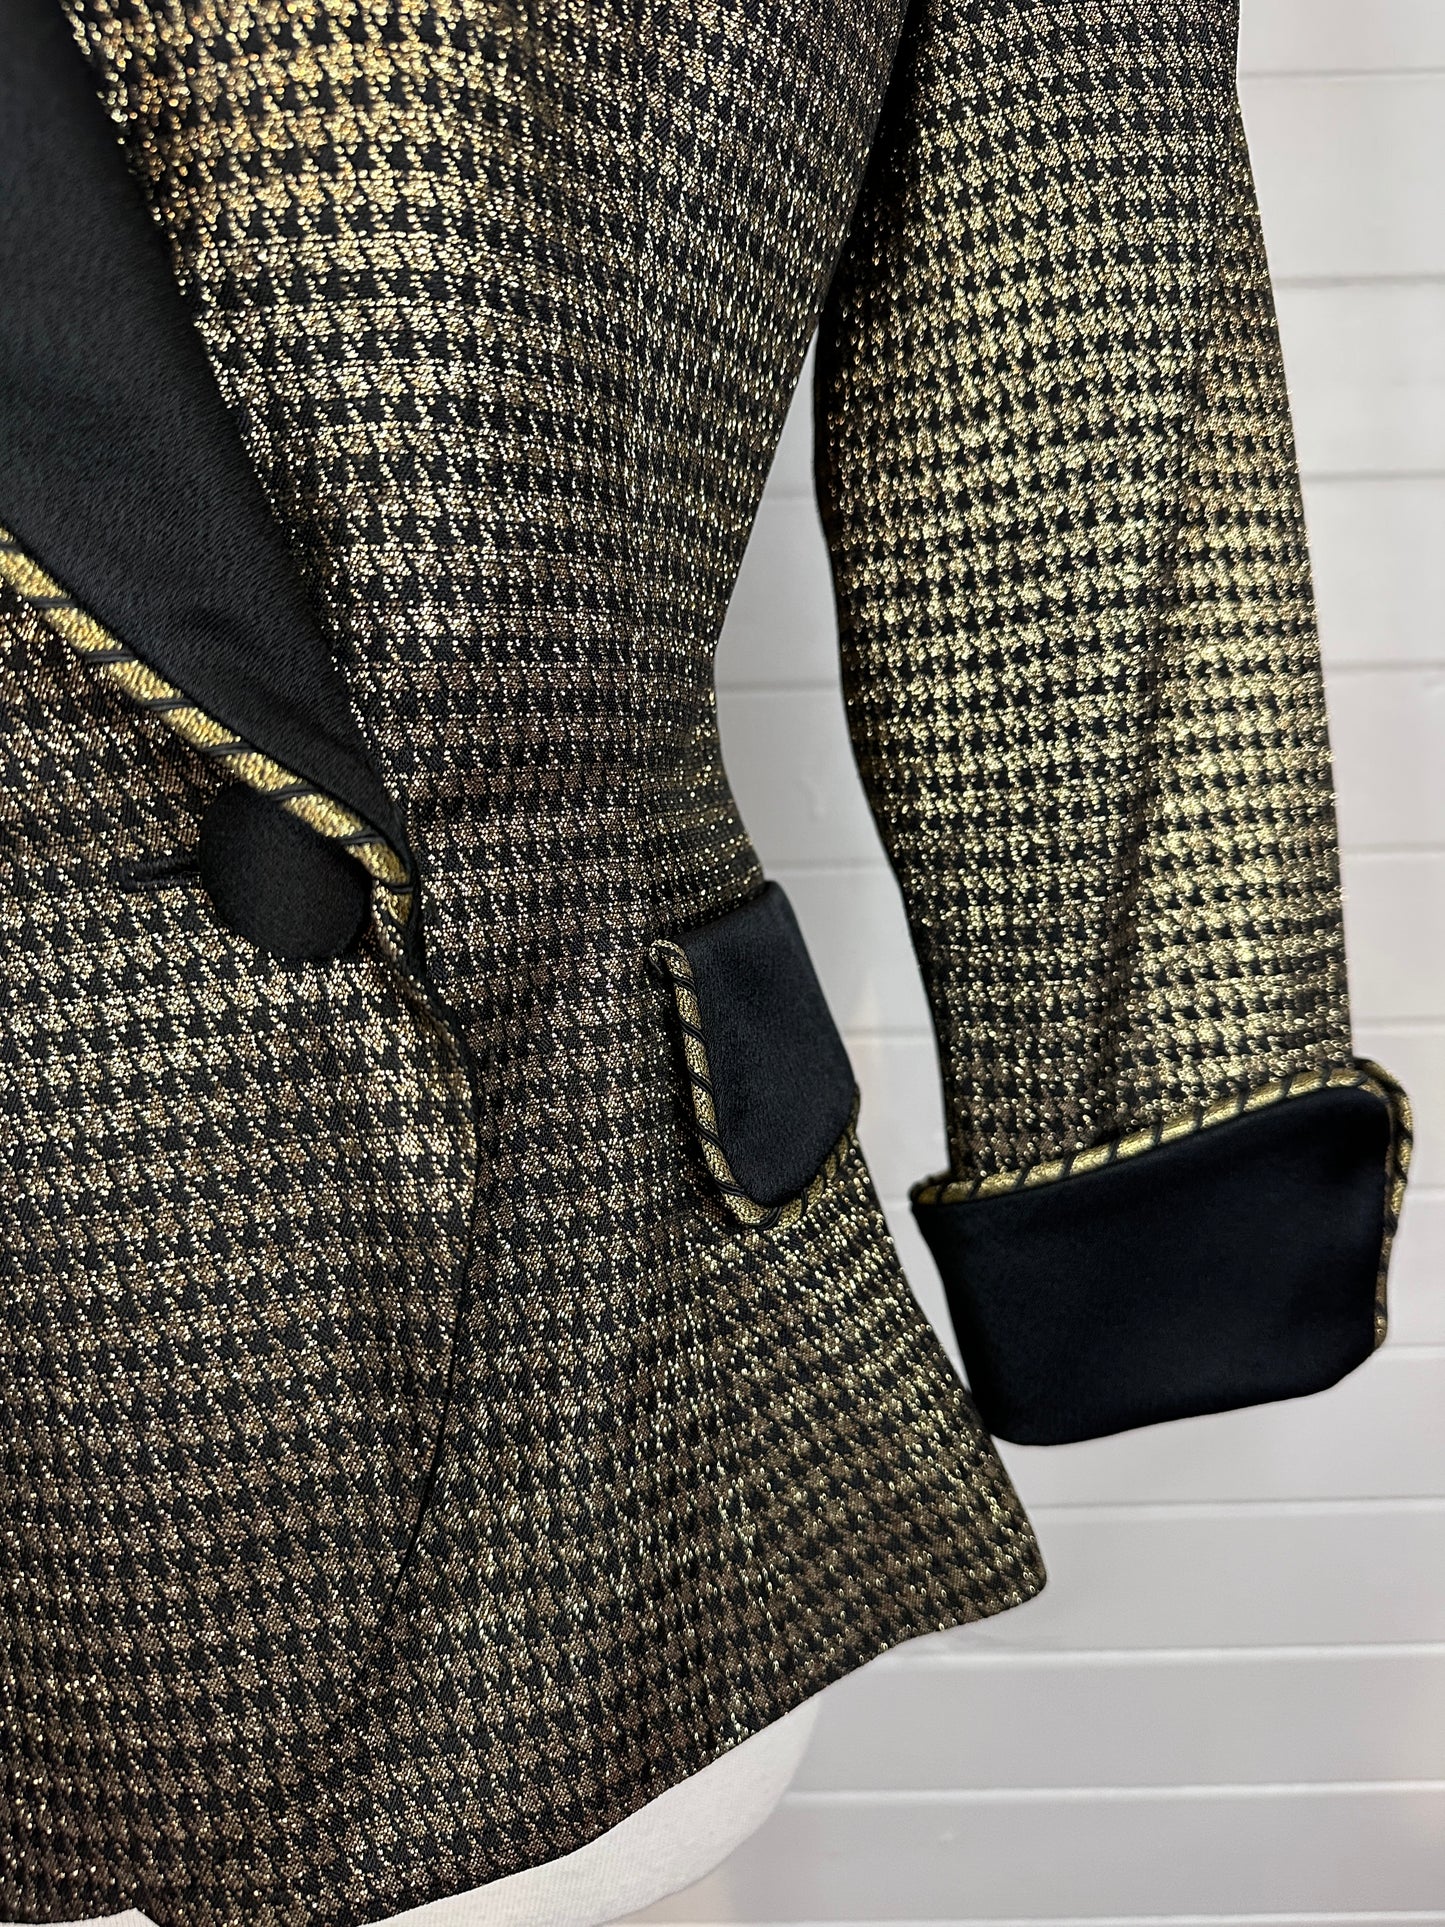 1980's Daymor Couture Tailored Metallic Gold and Black Herringbone Tuxedo/Smoking Jacket with Shawl Collar (10)